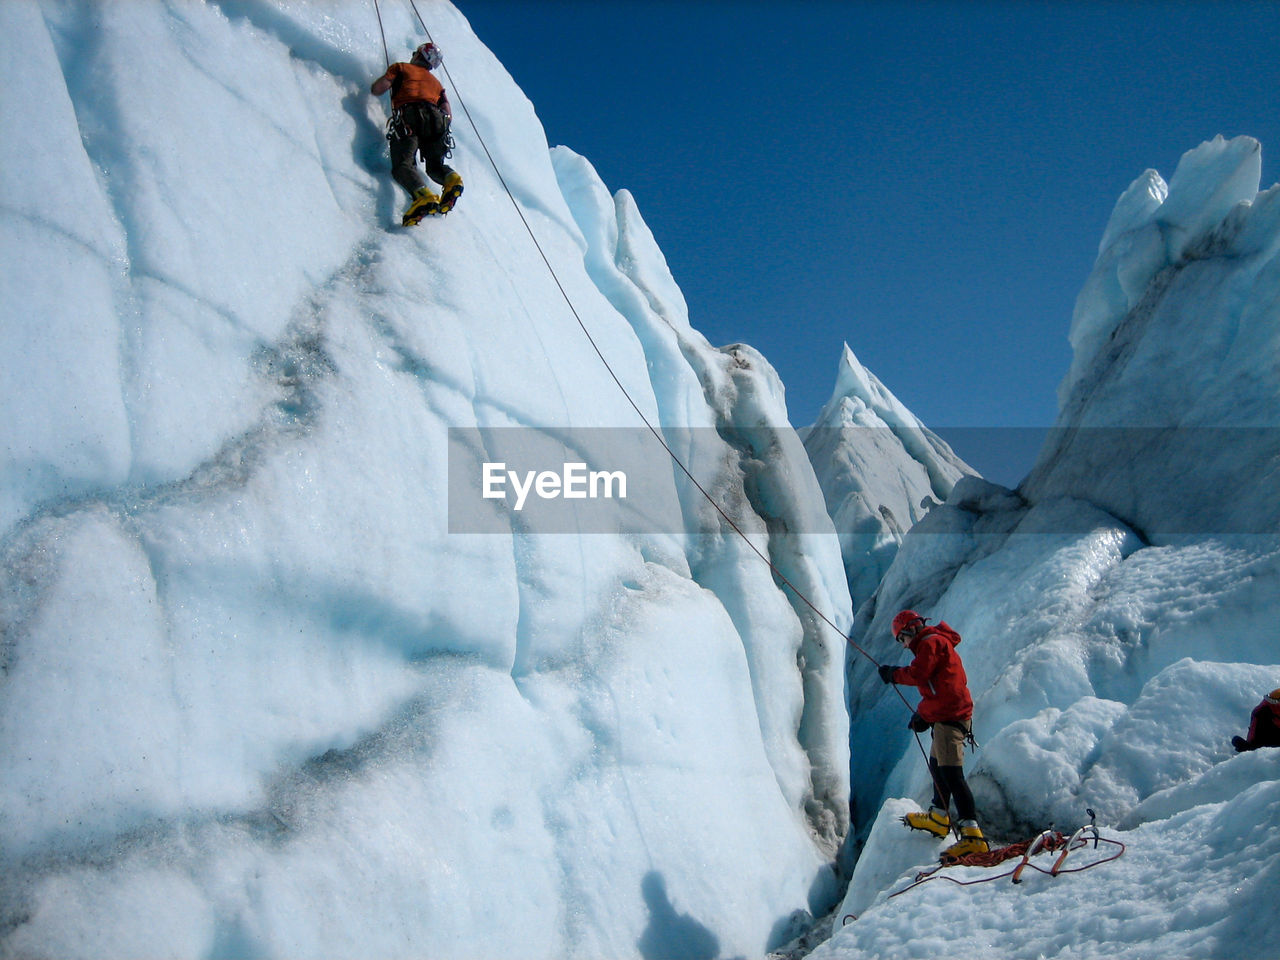 Ice climbers on the matanuska glacier in alaska